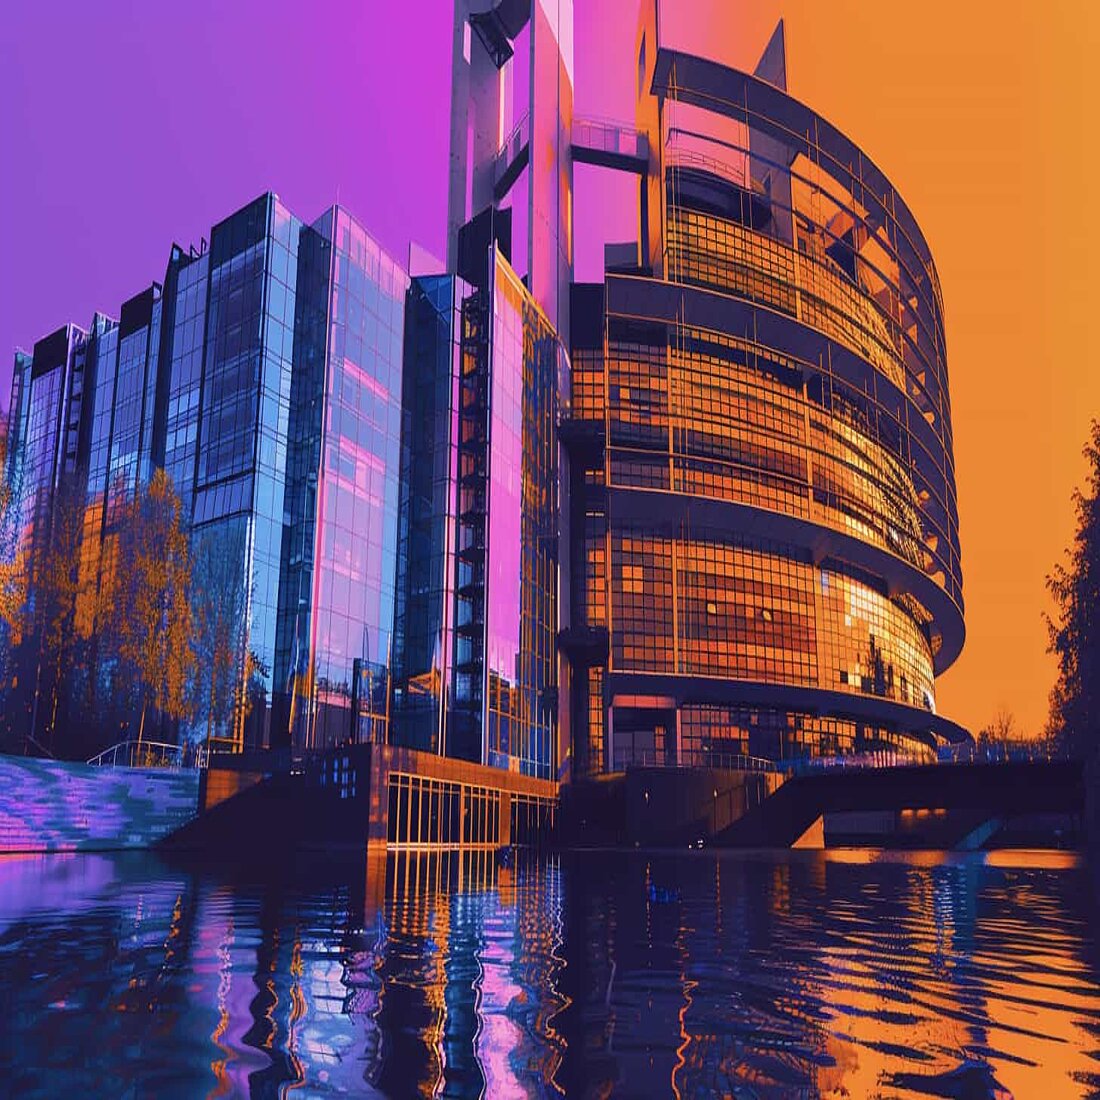 GDPR data minimization principles were inaugurated in Strasbourg